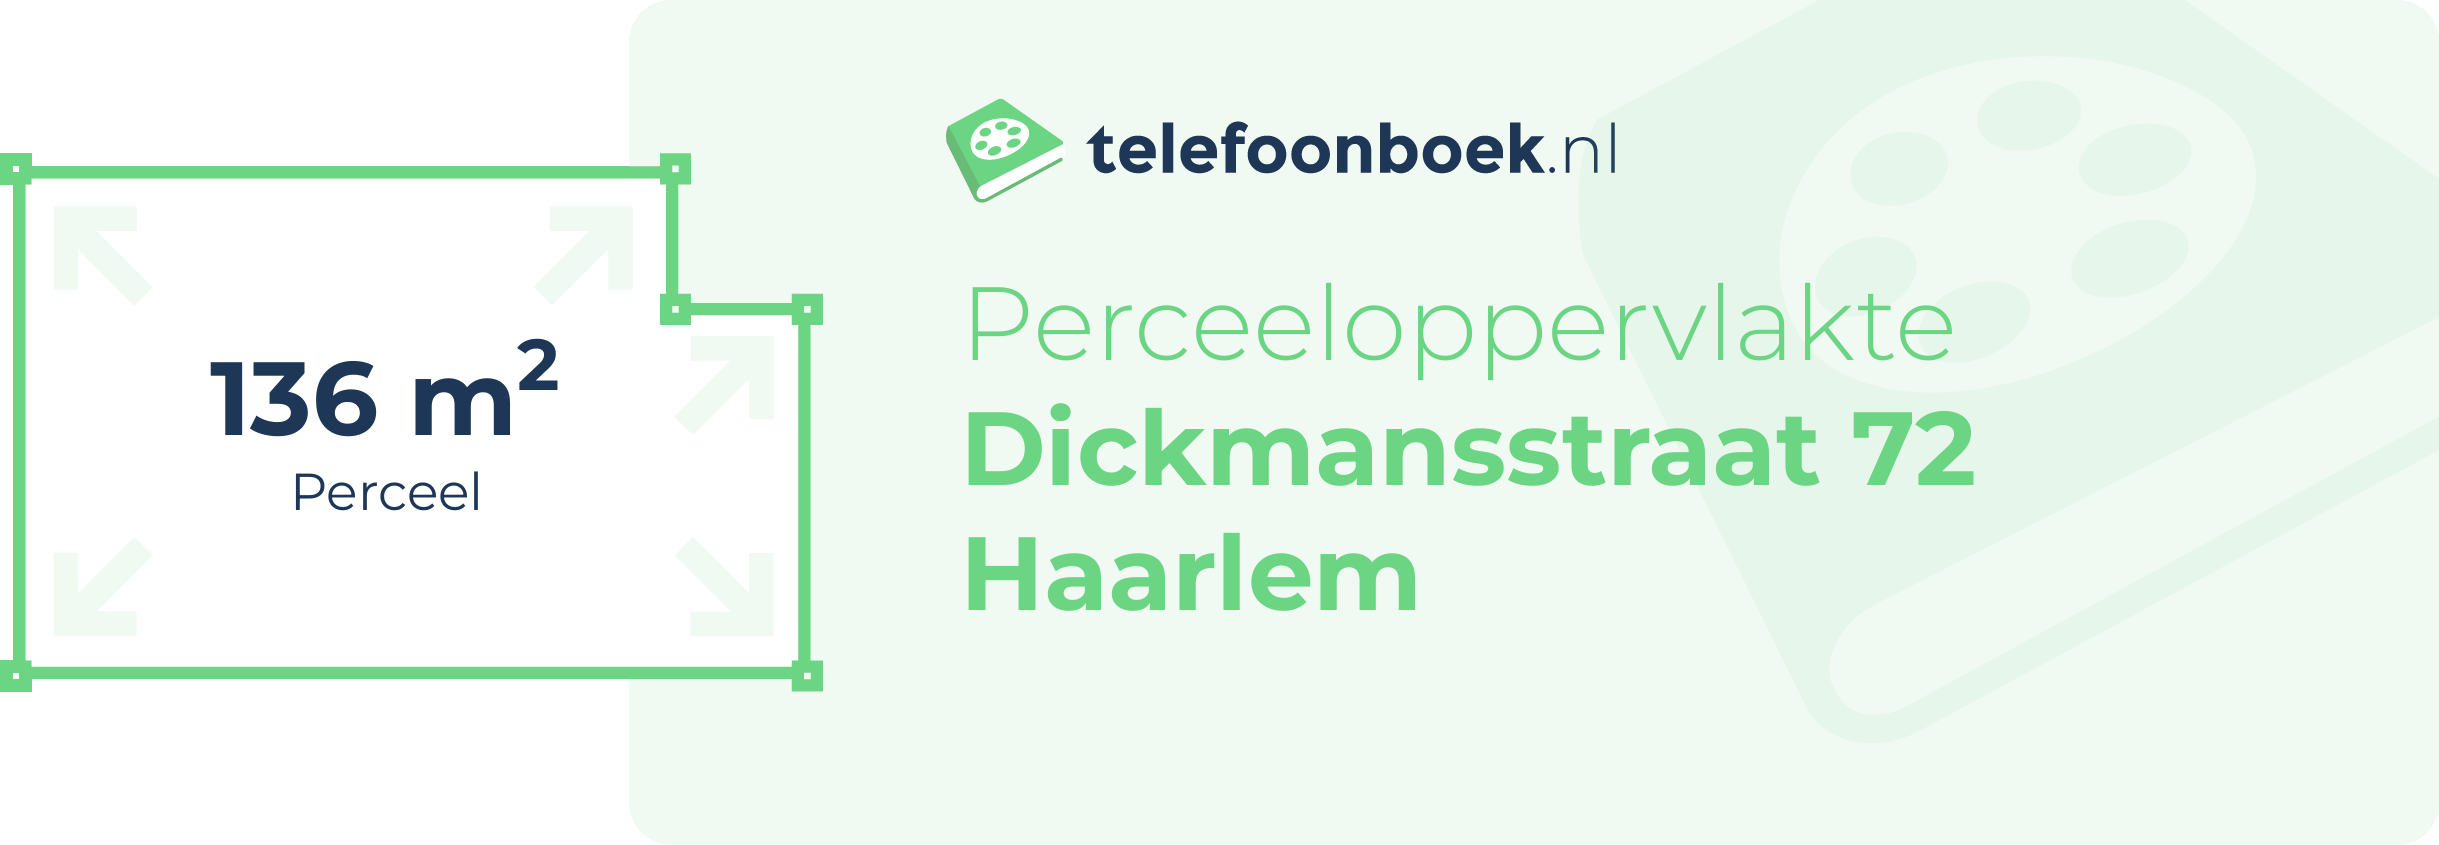 Perceeloppervlakte Dickmansstraat 72 Haarlem